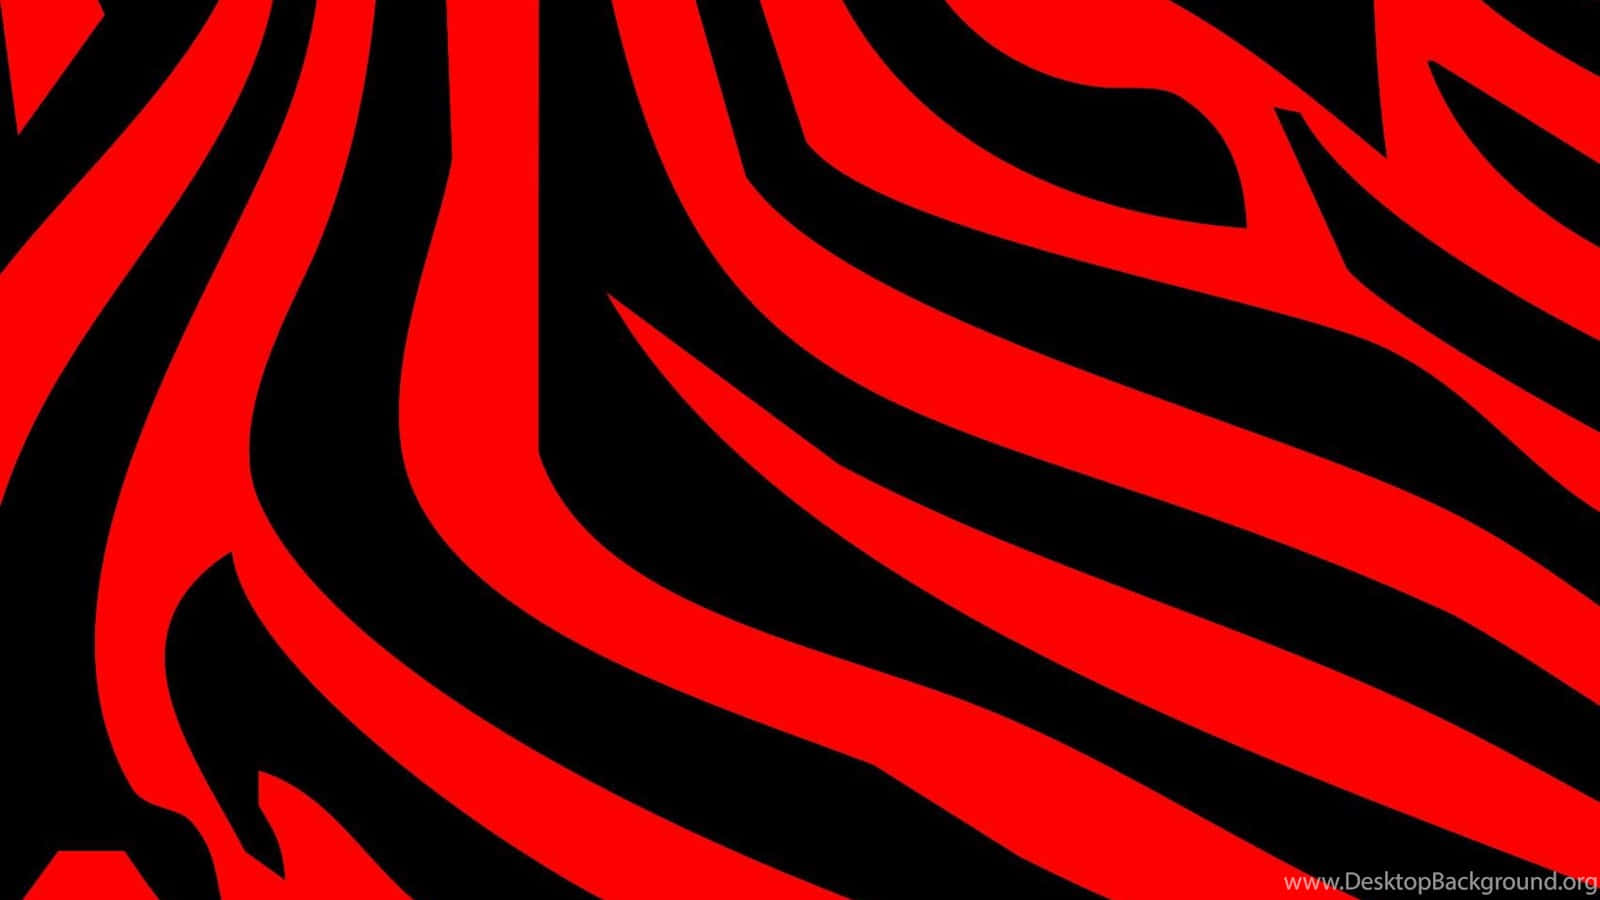 A Red And Black Zebra Print Background